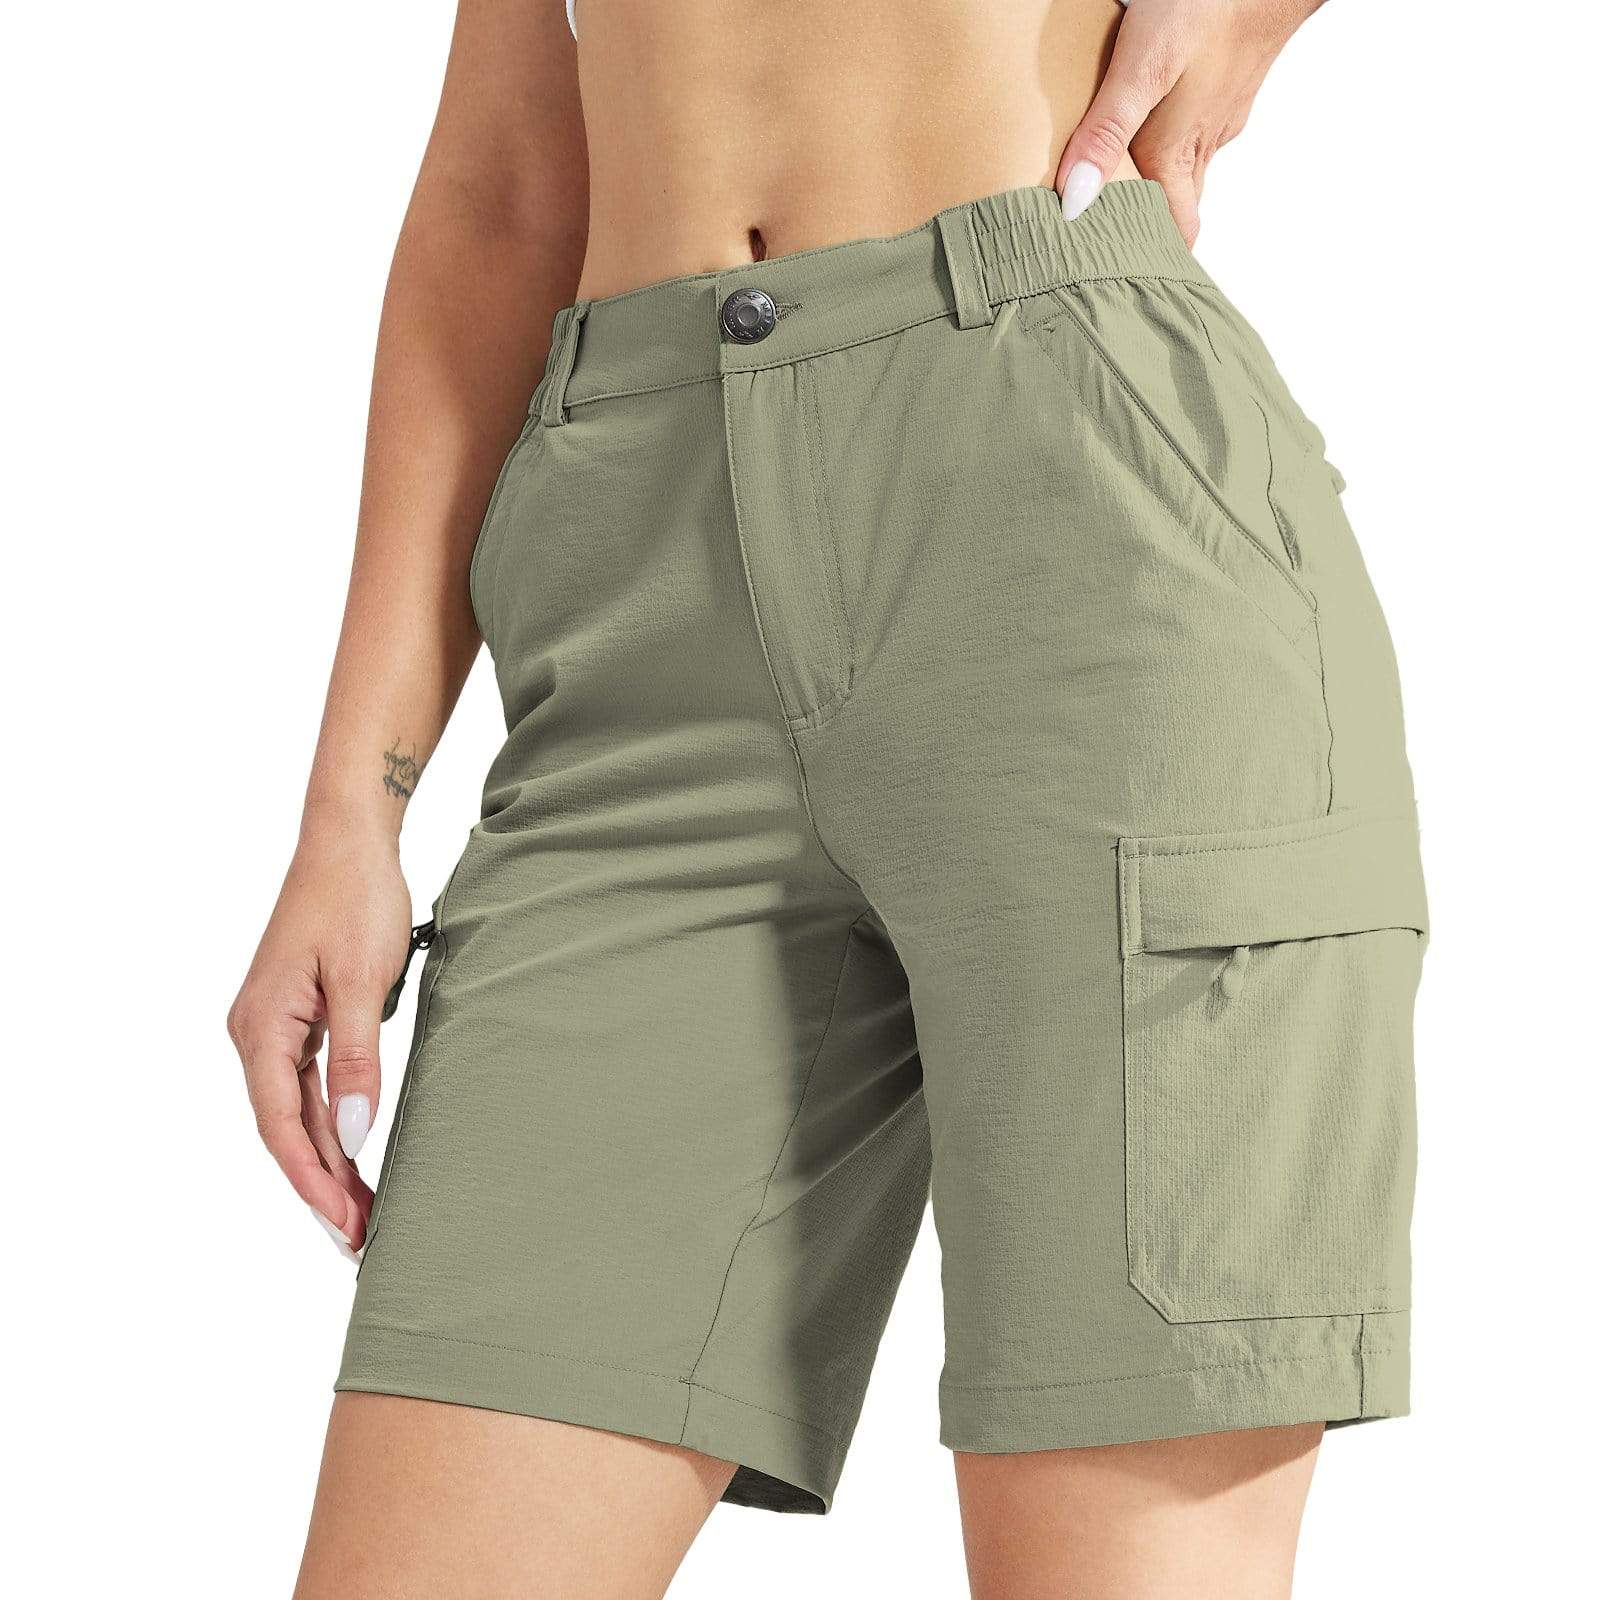 Women's Stretchy Hiking Shorts Quick Dry Cargo Shorts - Rock Grey / 2